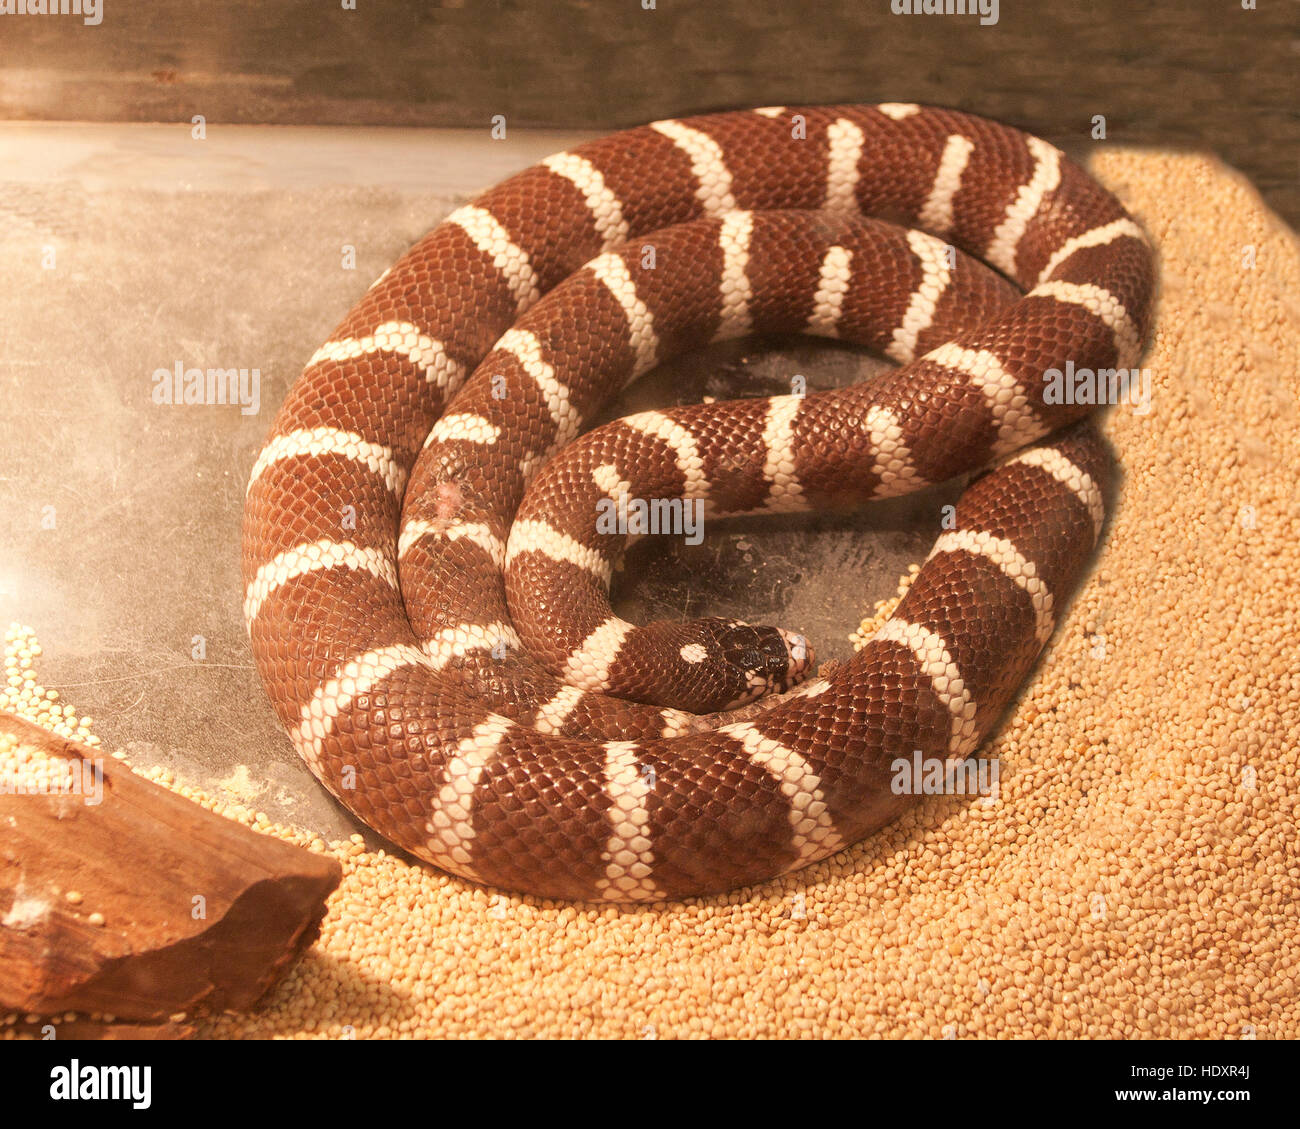 Coiled California King Snake Stock Photo